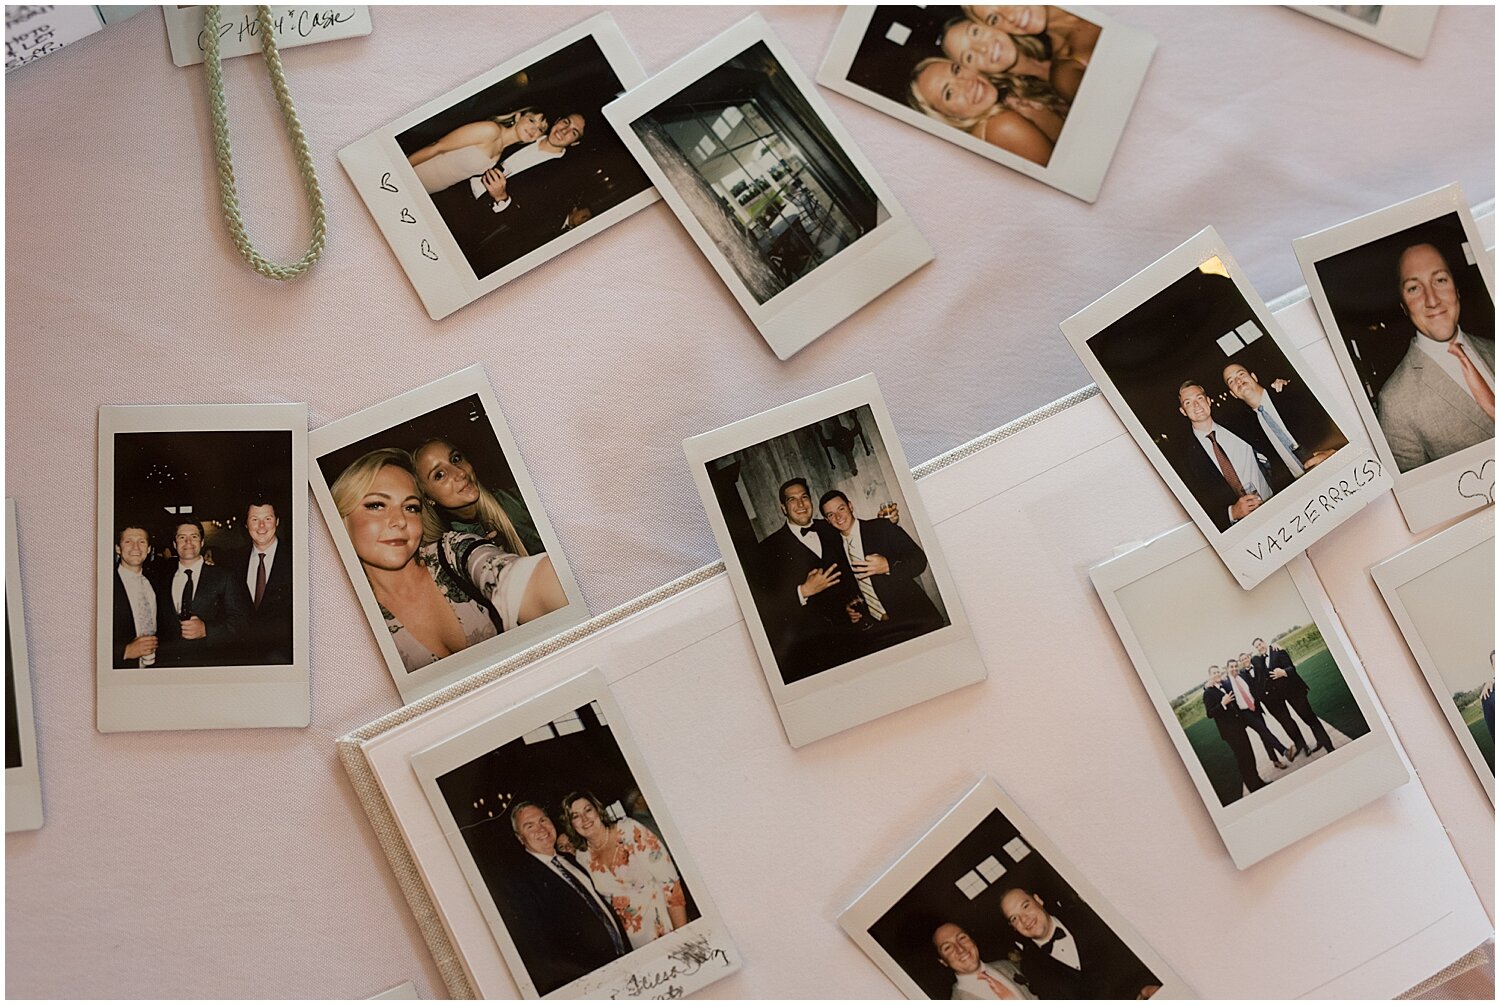  polaroid photos for wedding guests 